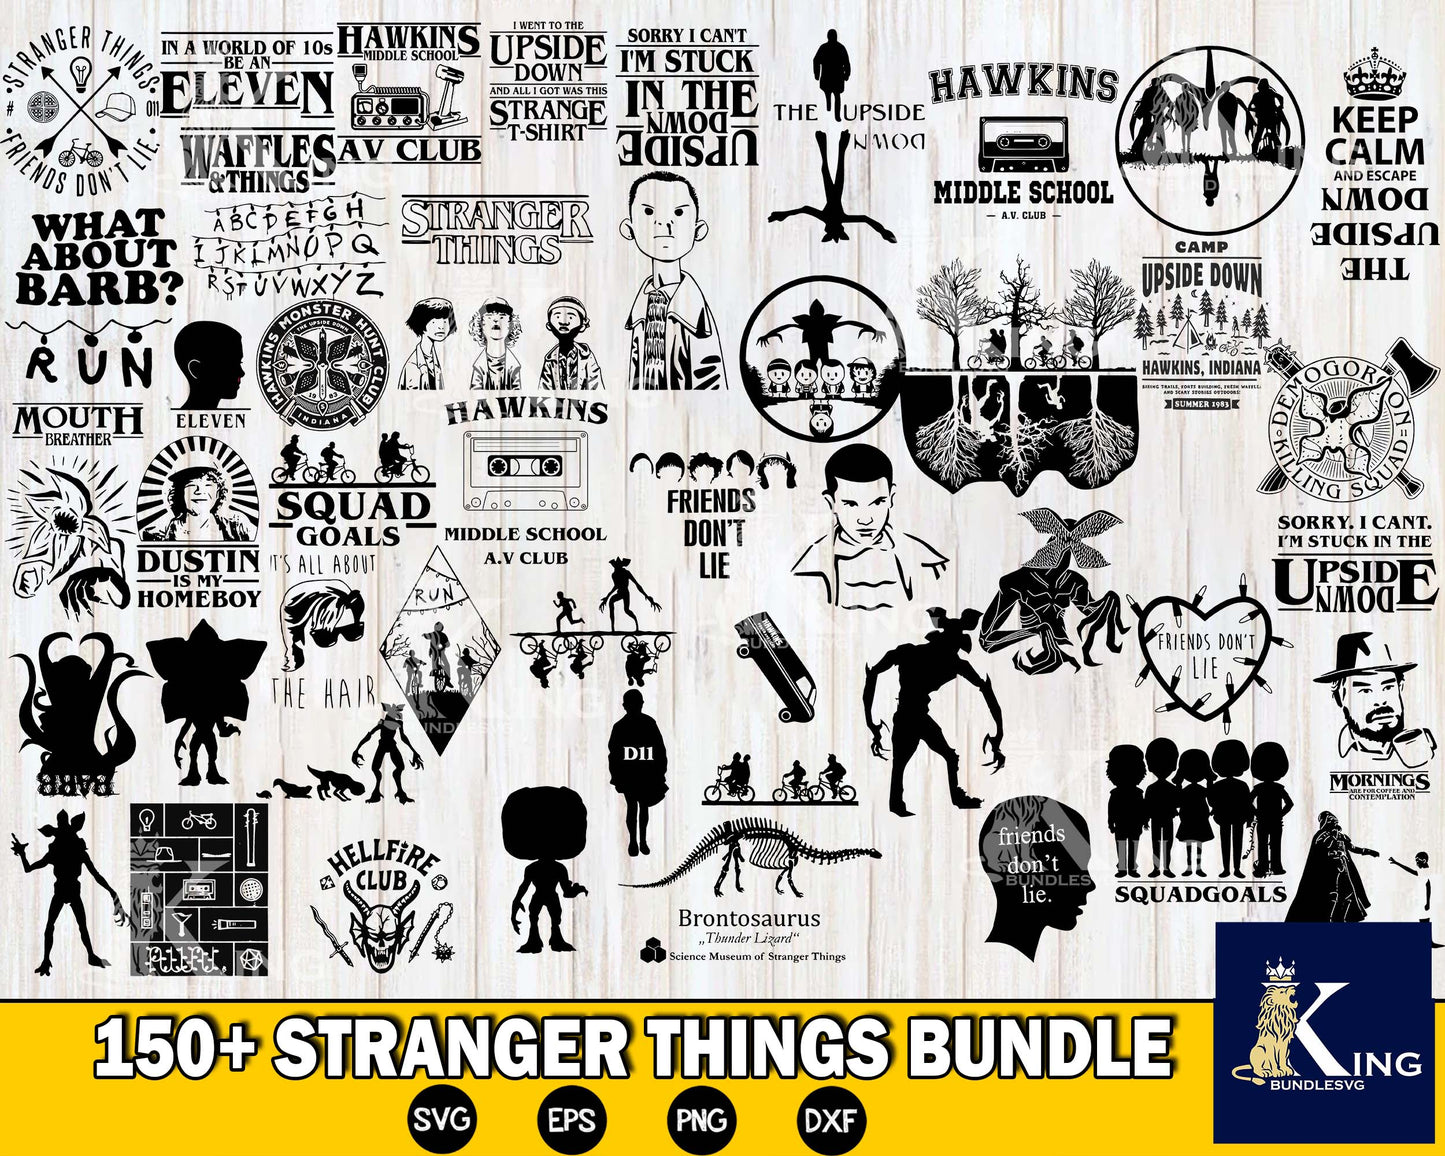 Stranger things bundle svg ,1000+ file Mega Bundle Stranger Things svg dxf eps png, for Cricut, Silhouette, digital, file cut